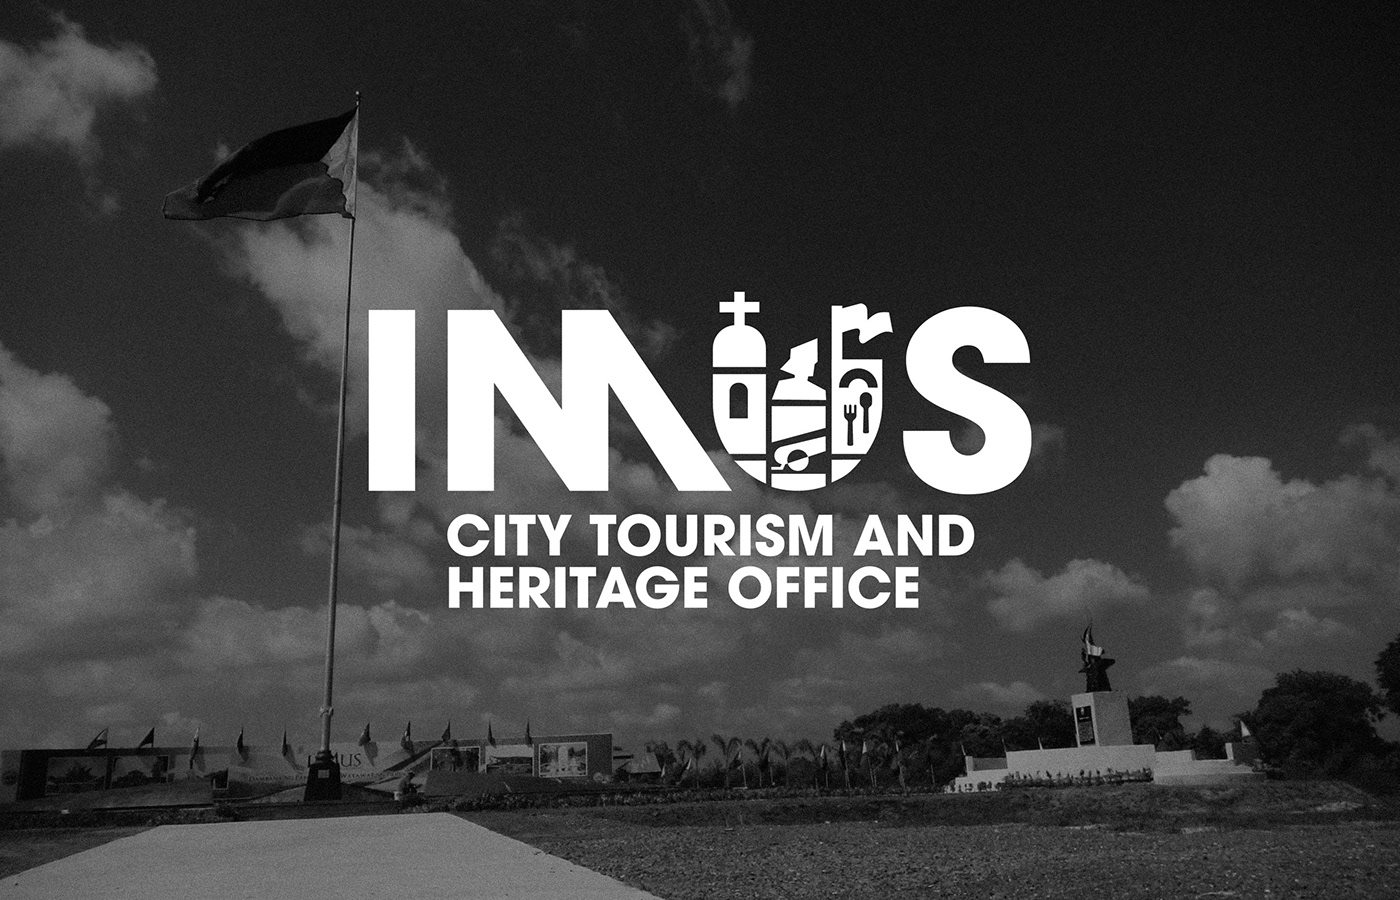 imus history cavite tourism culture katipunan philippines Flag Capital longganisang imus